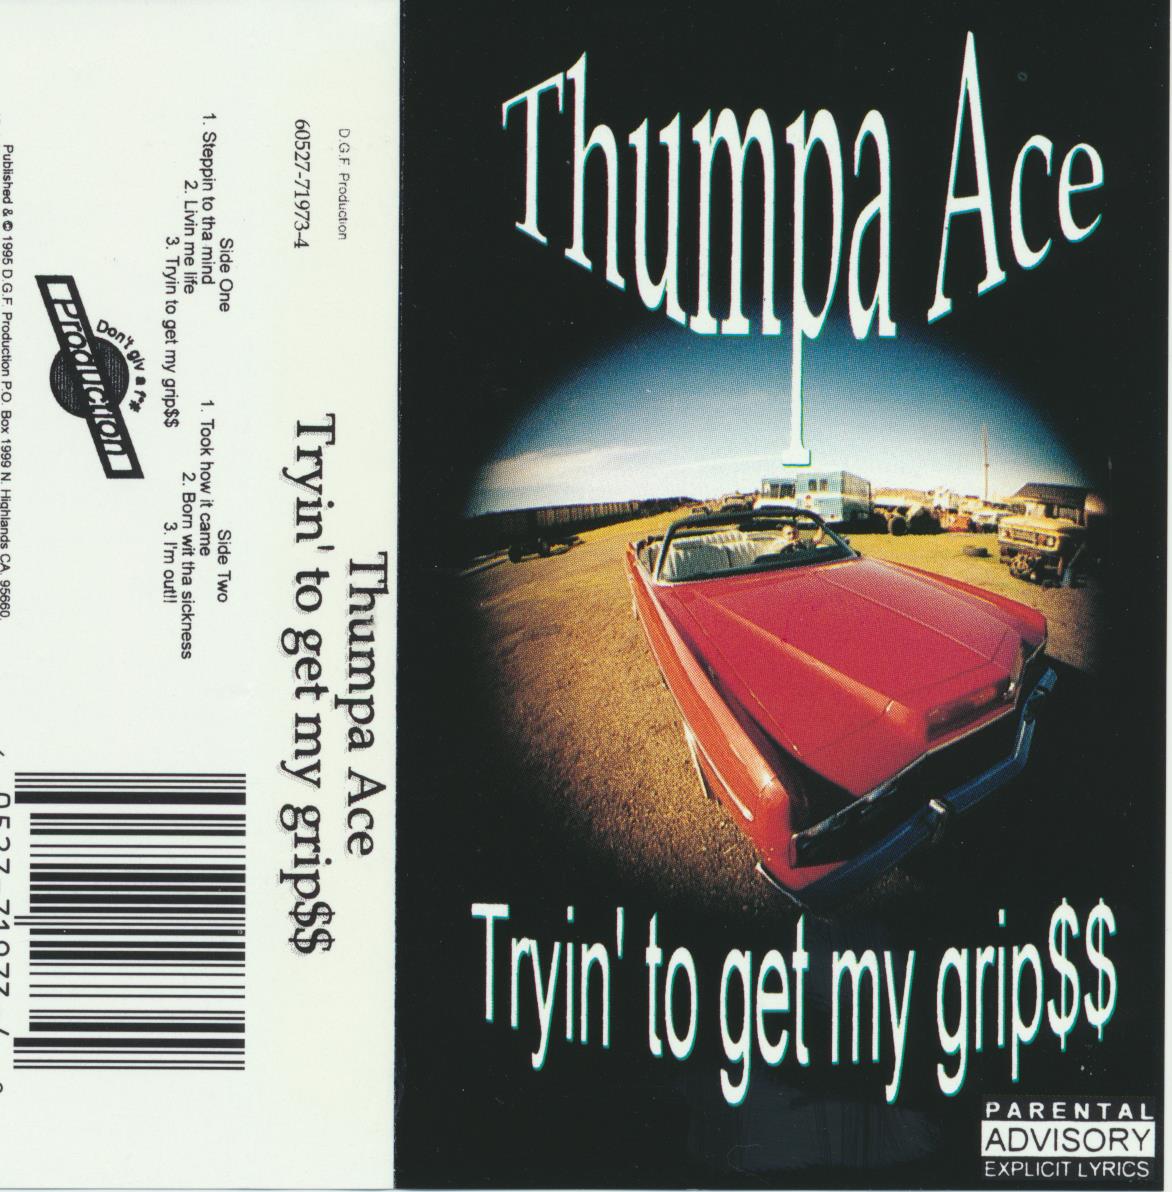 Thumpa Ace - Tryin' To Get My Grip$$